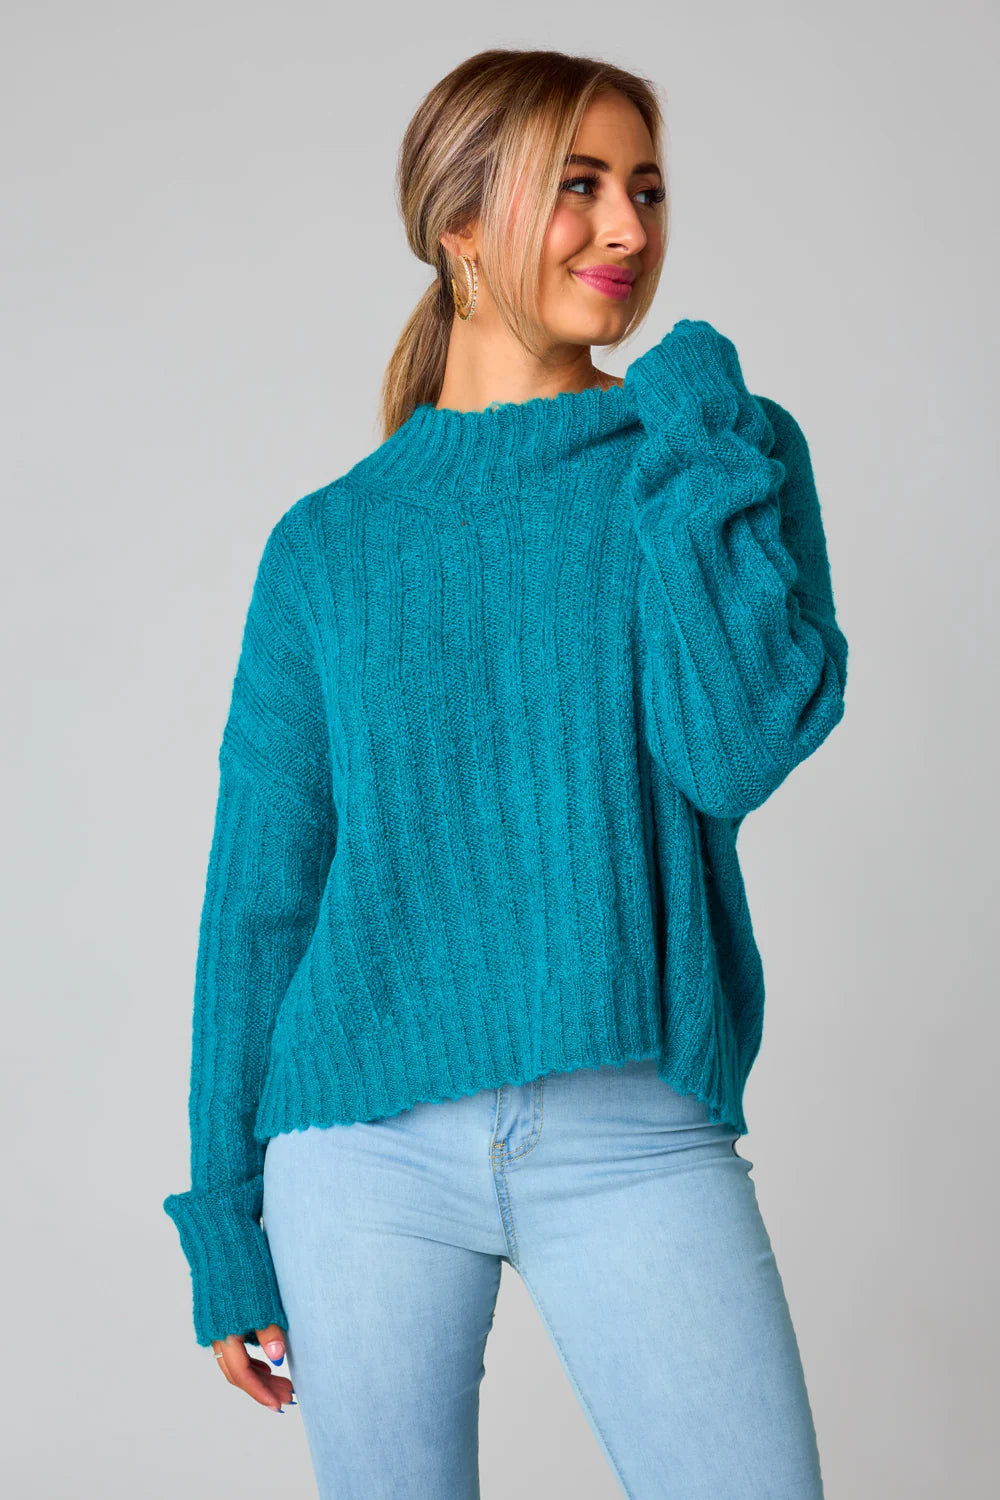 Hadley Teal Sweater